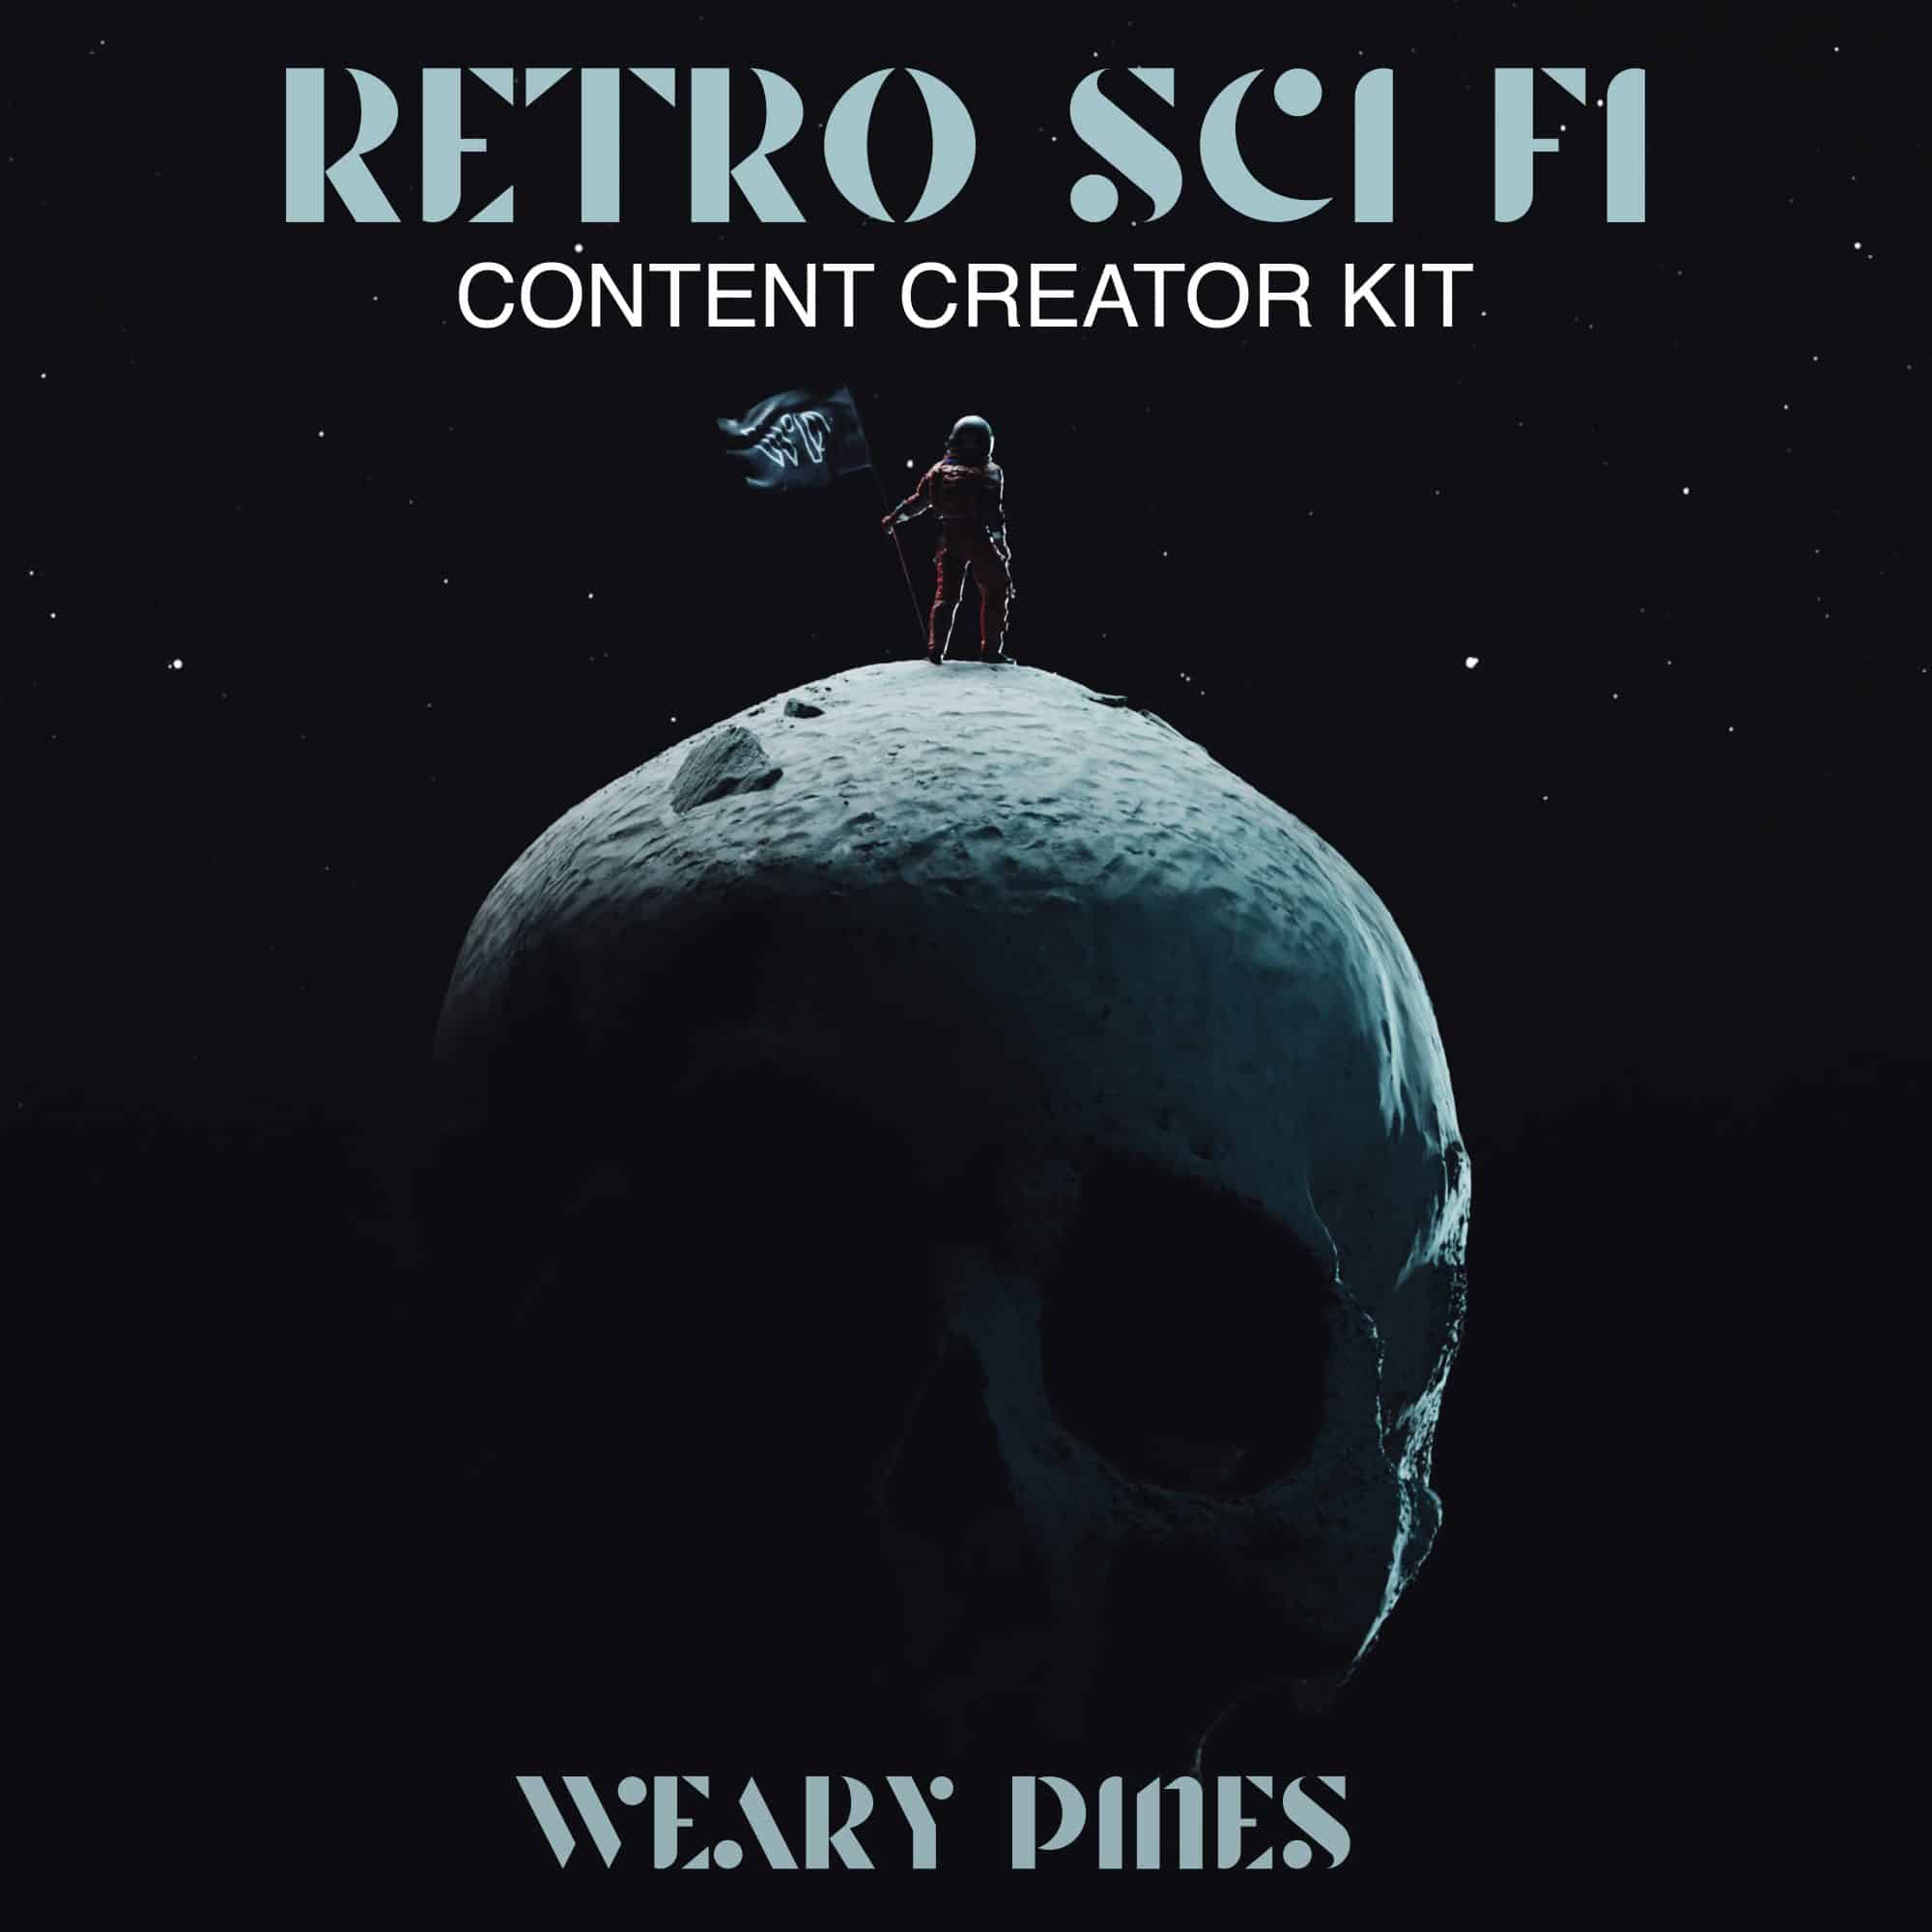 Retro Sci Fi Content Creator Kit